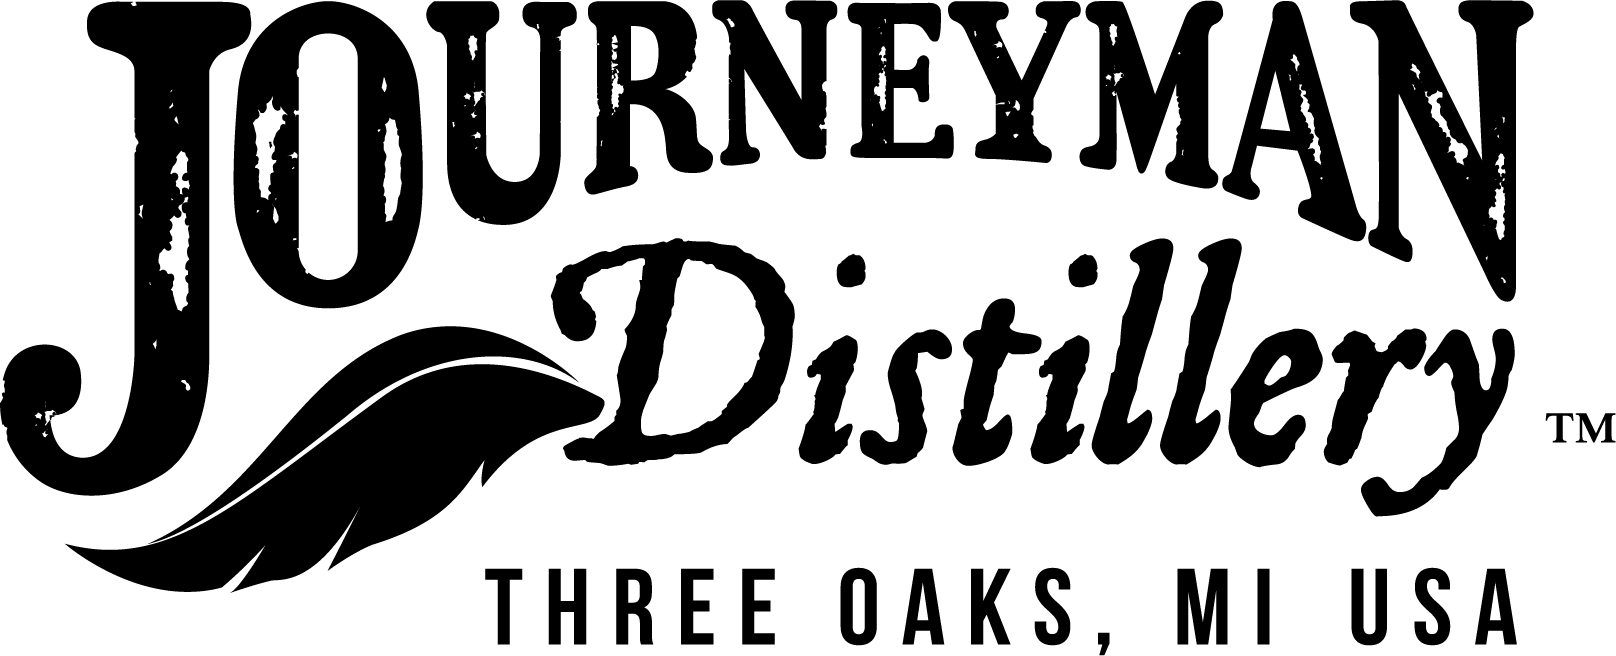 Journeyman Distillery Logo